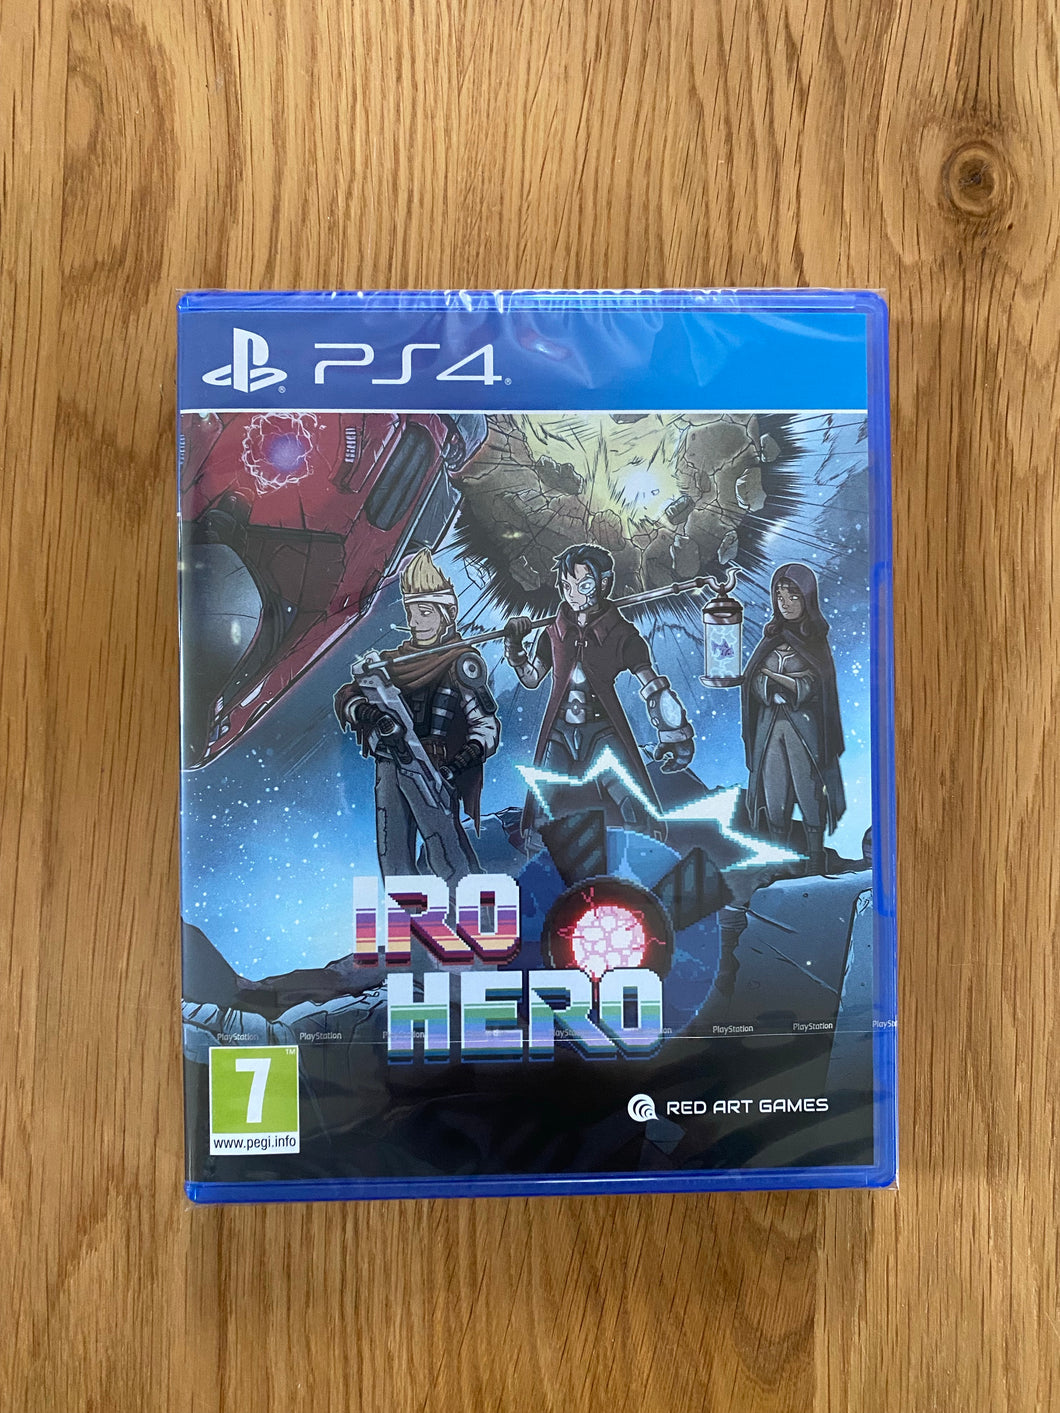 Iro hero / Red art games / PS4 / 999 copies